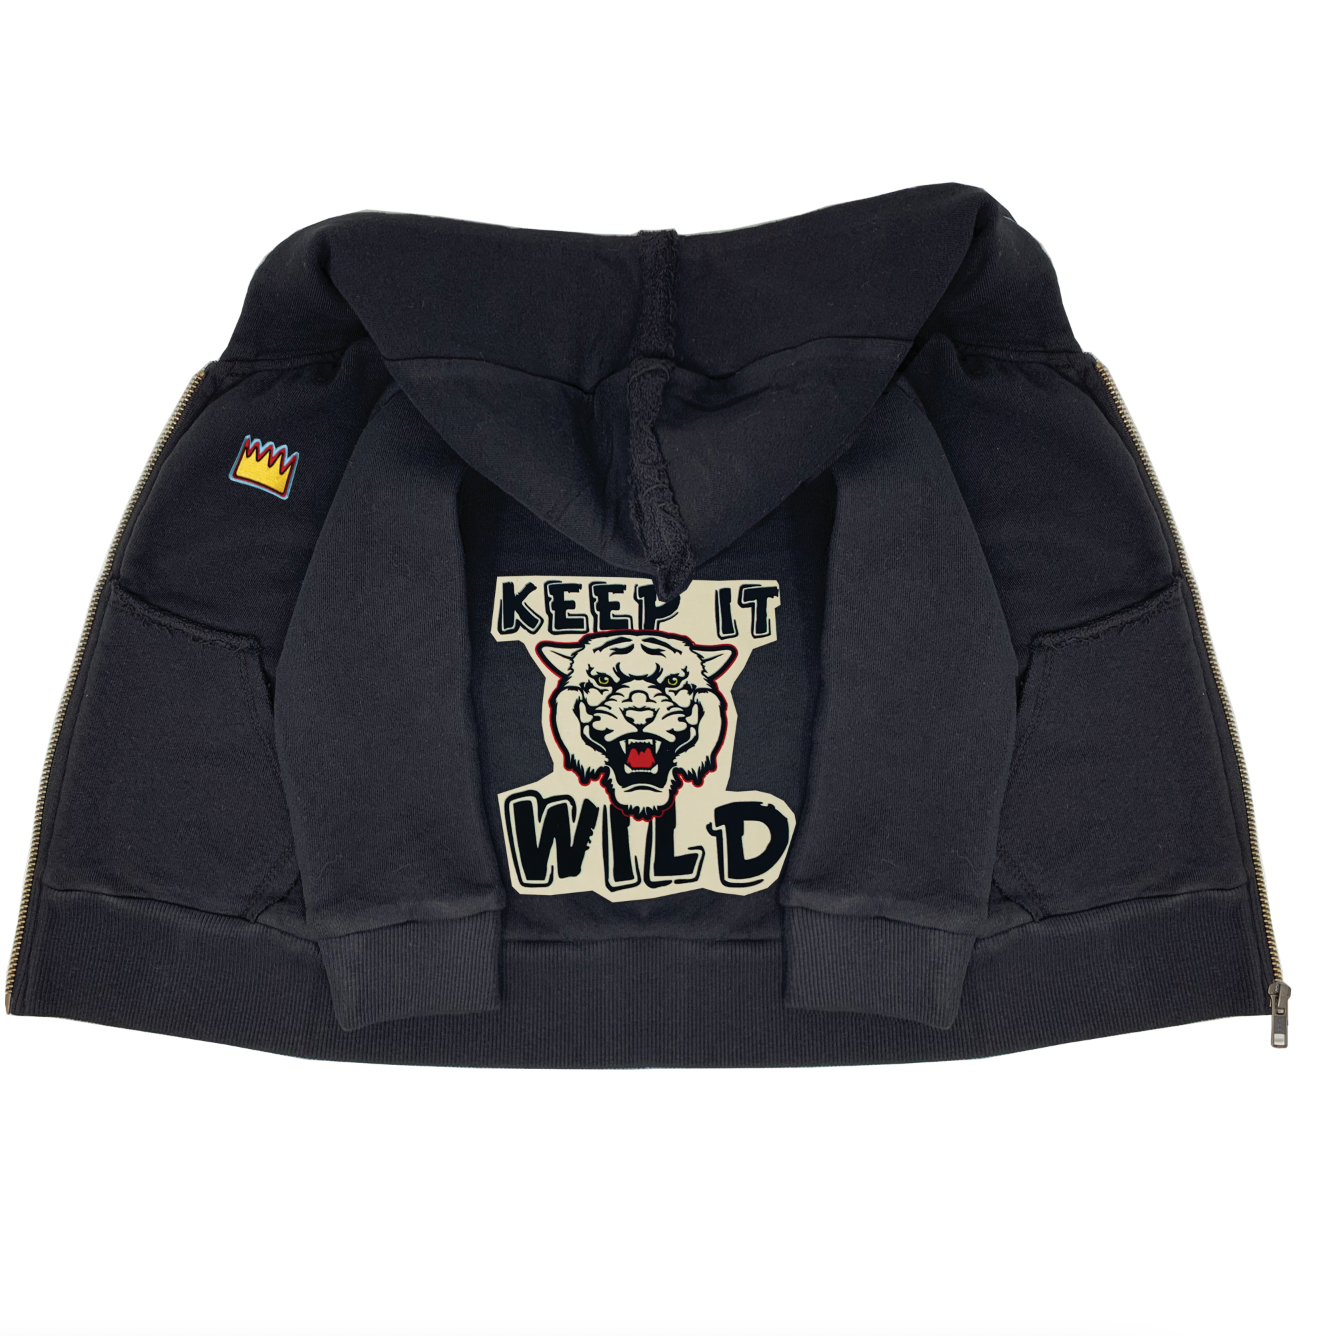 Keep It Wild Black Zip Hoodie - Unisex for Boys and Girls